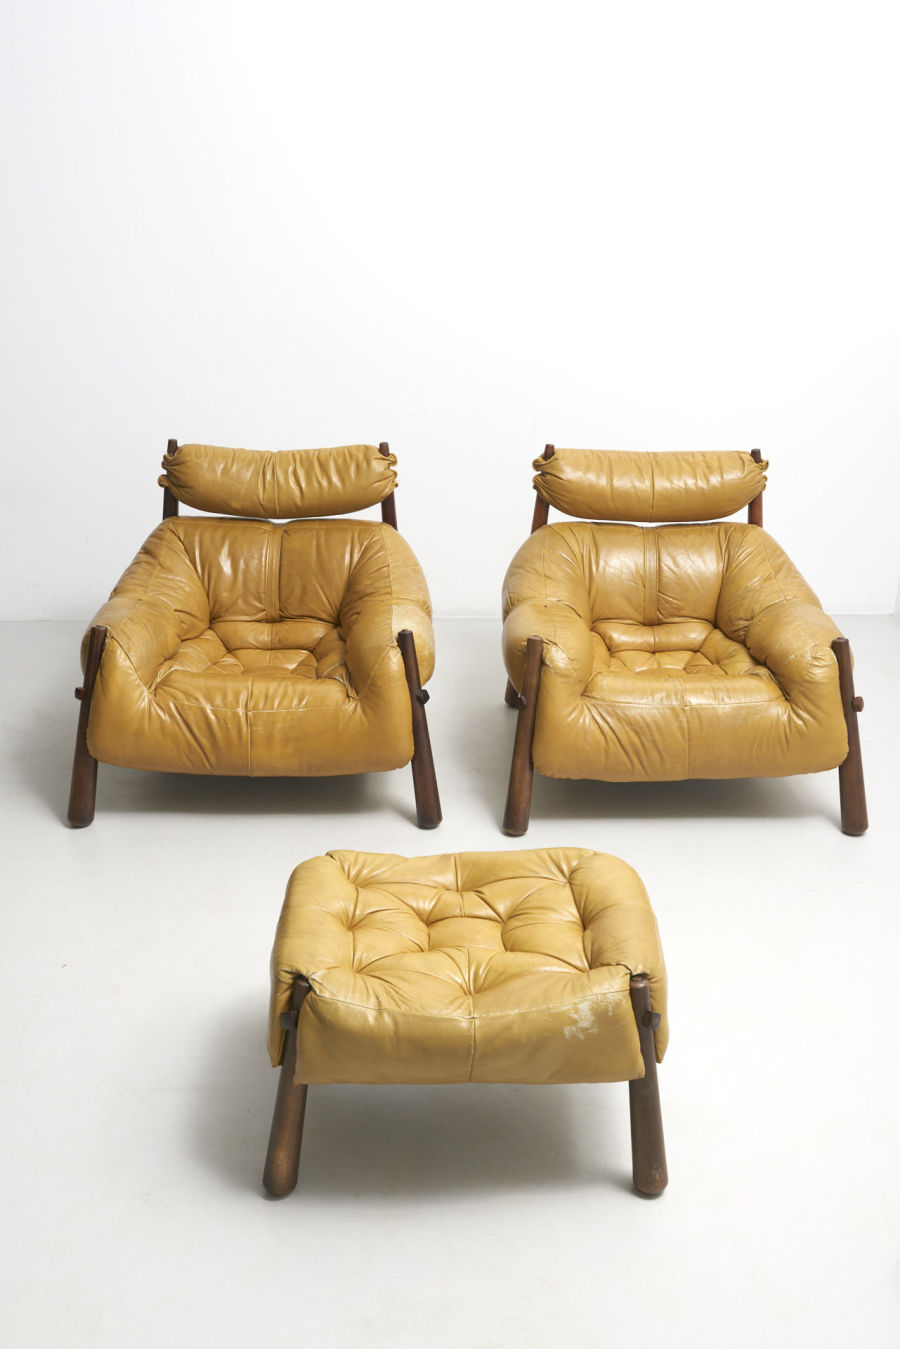 modestfurniture-vintage-2385-percival-lafer-easy-chair15